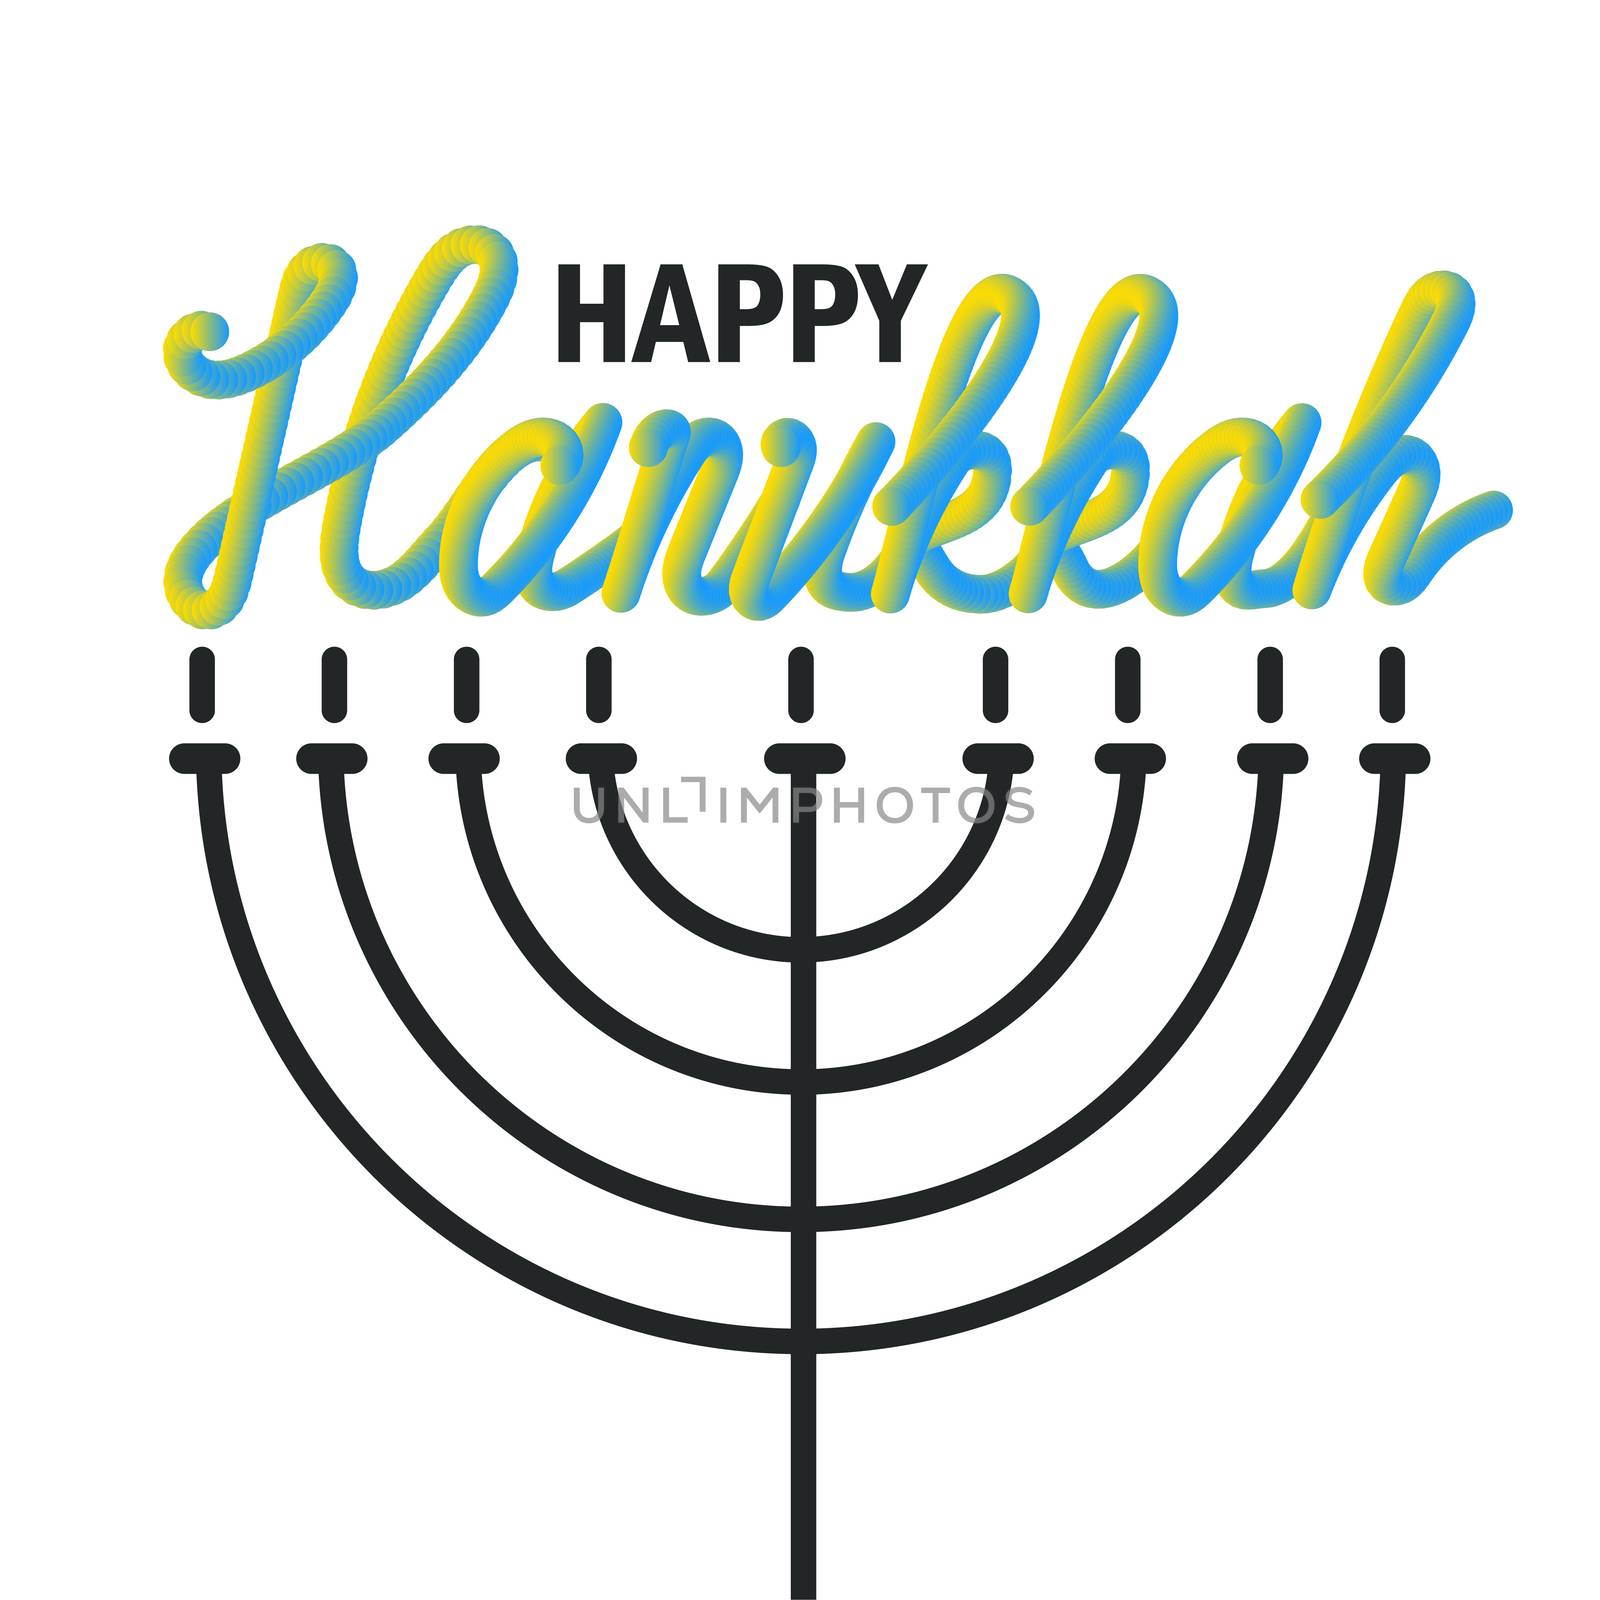 Hanukkah Greeting Banner by barsrsind